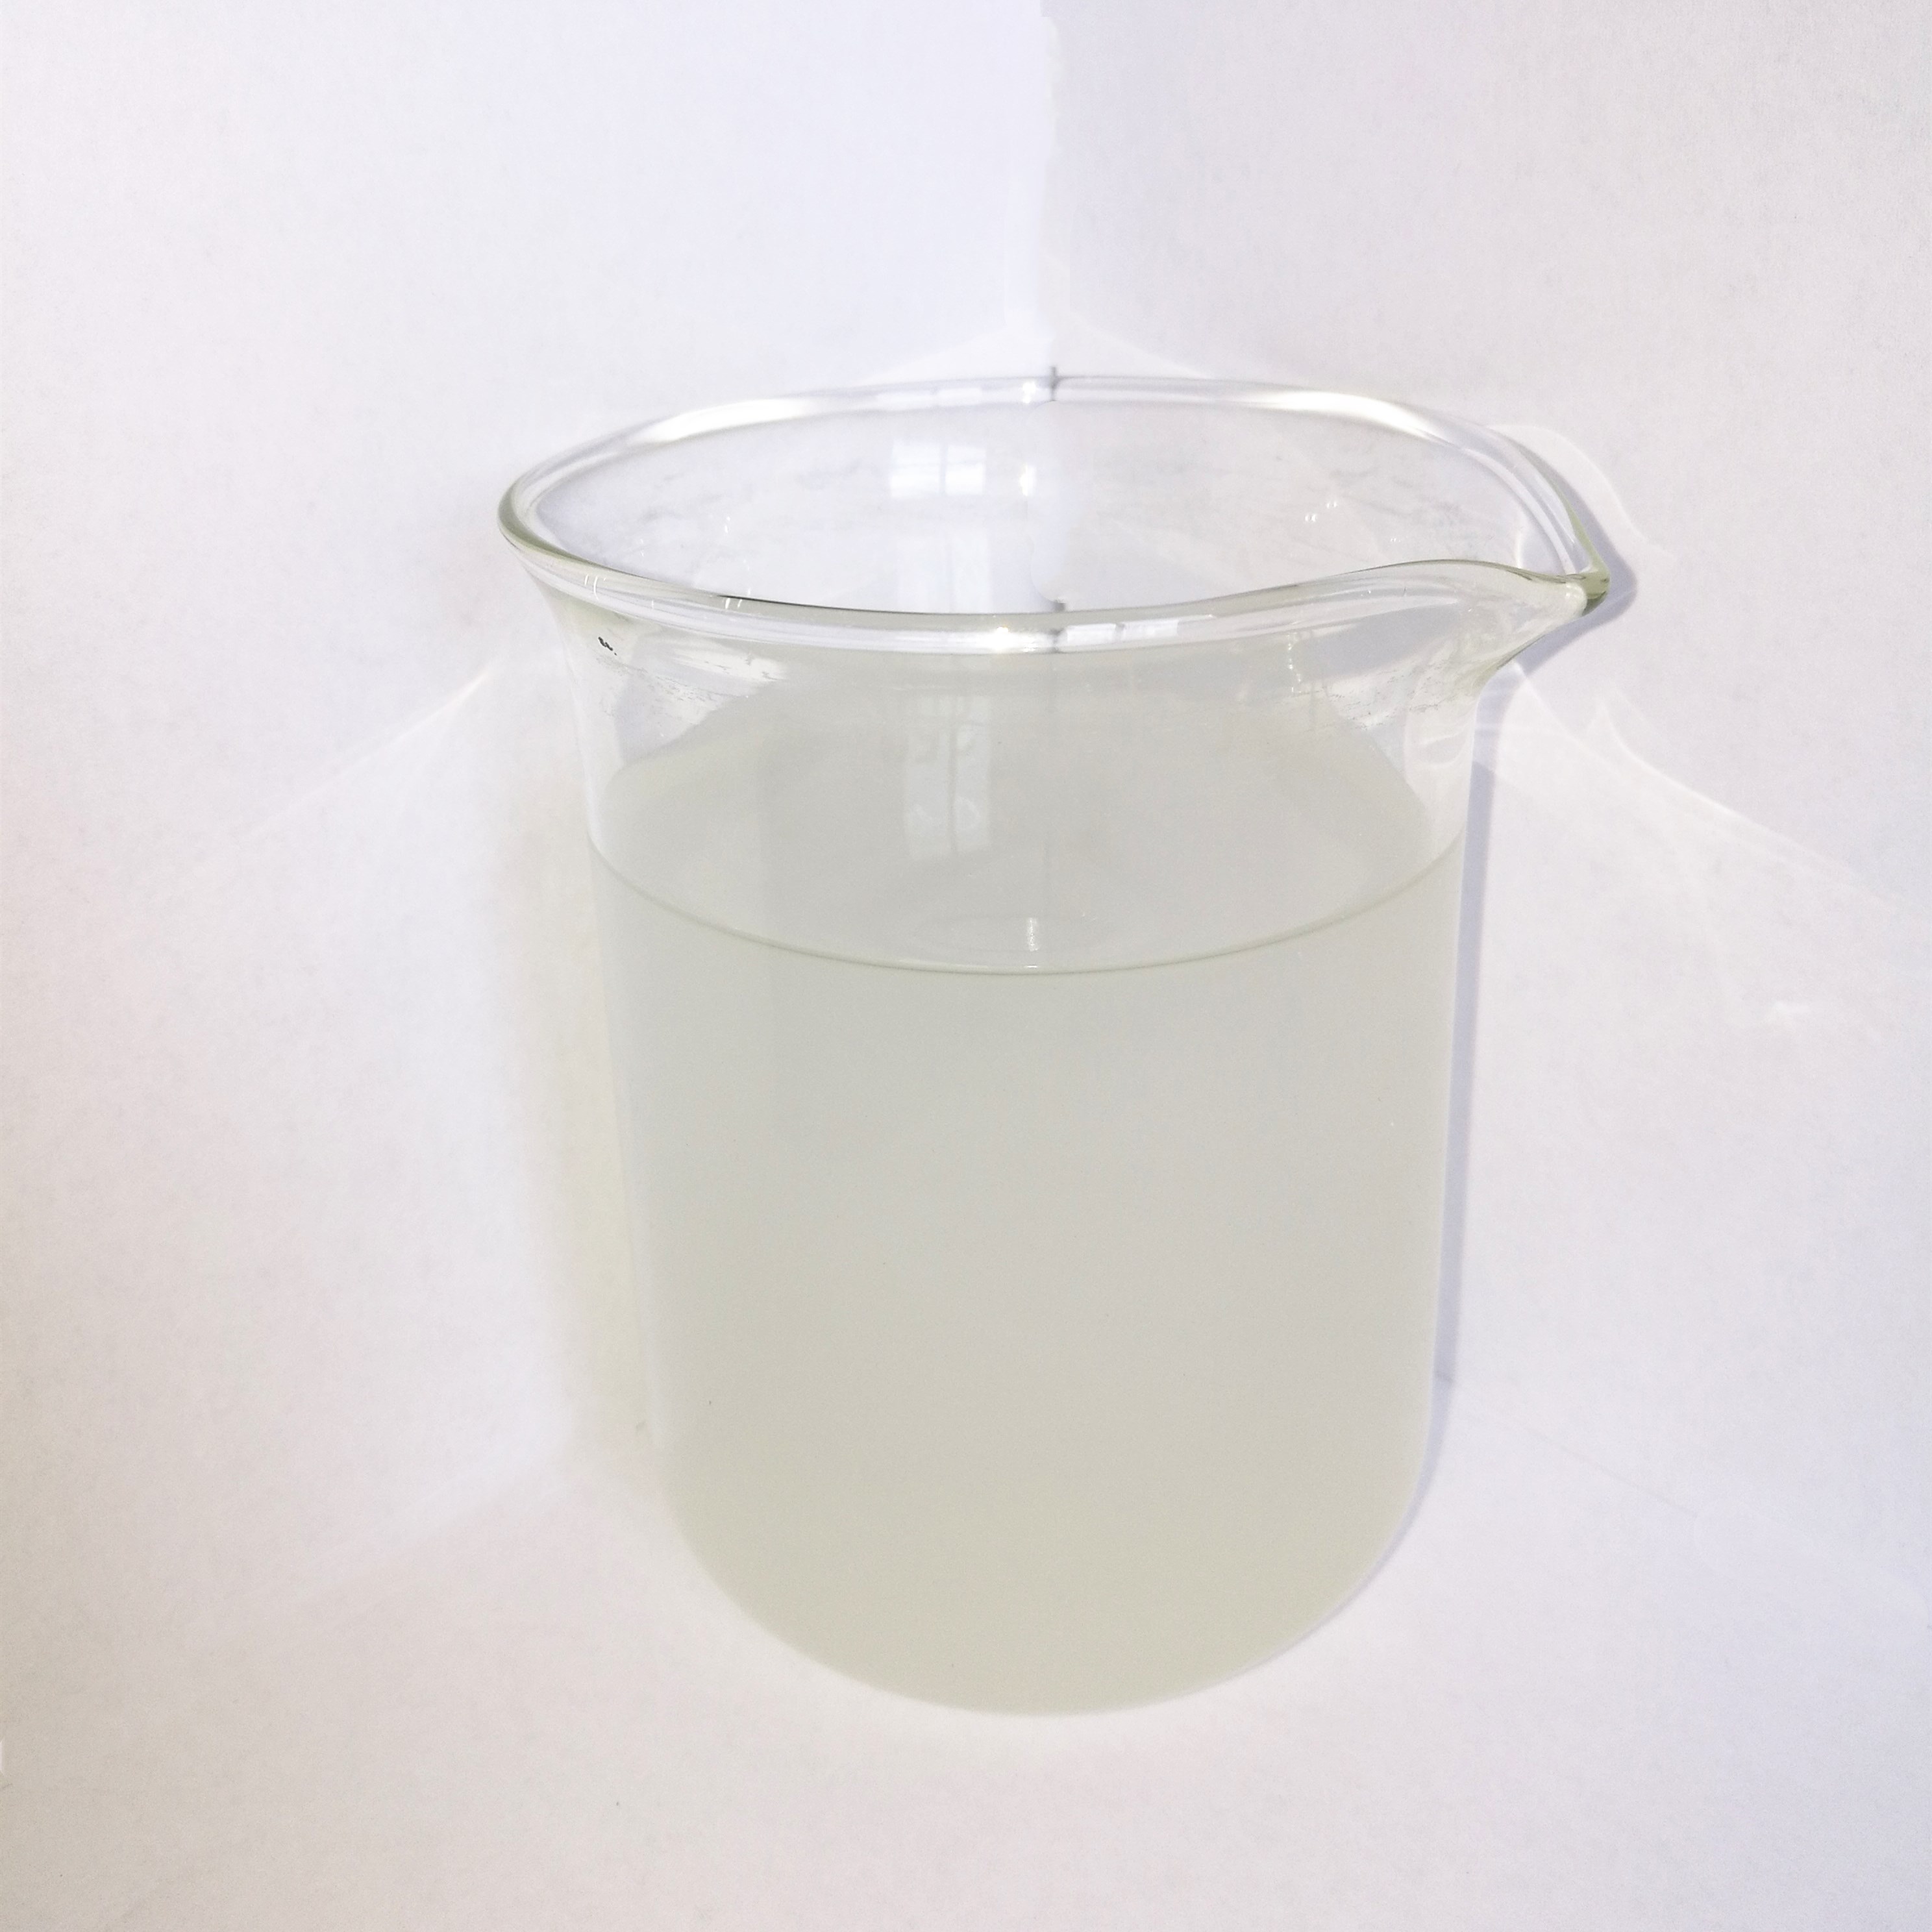 High Performance Polycarboxylate Superplasticizer Mother Liquid